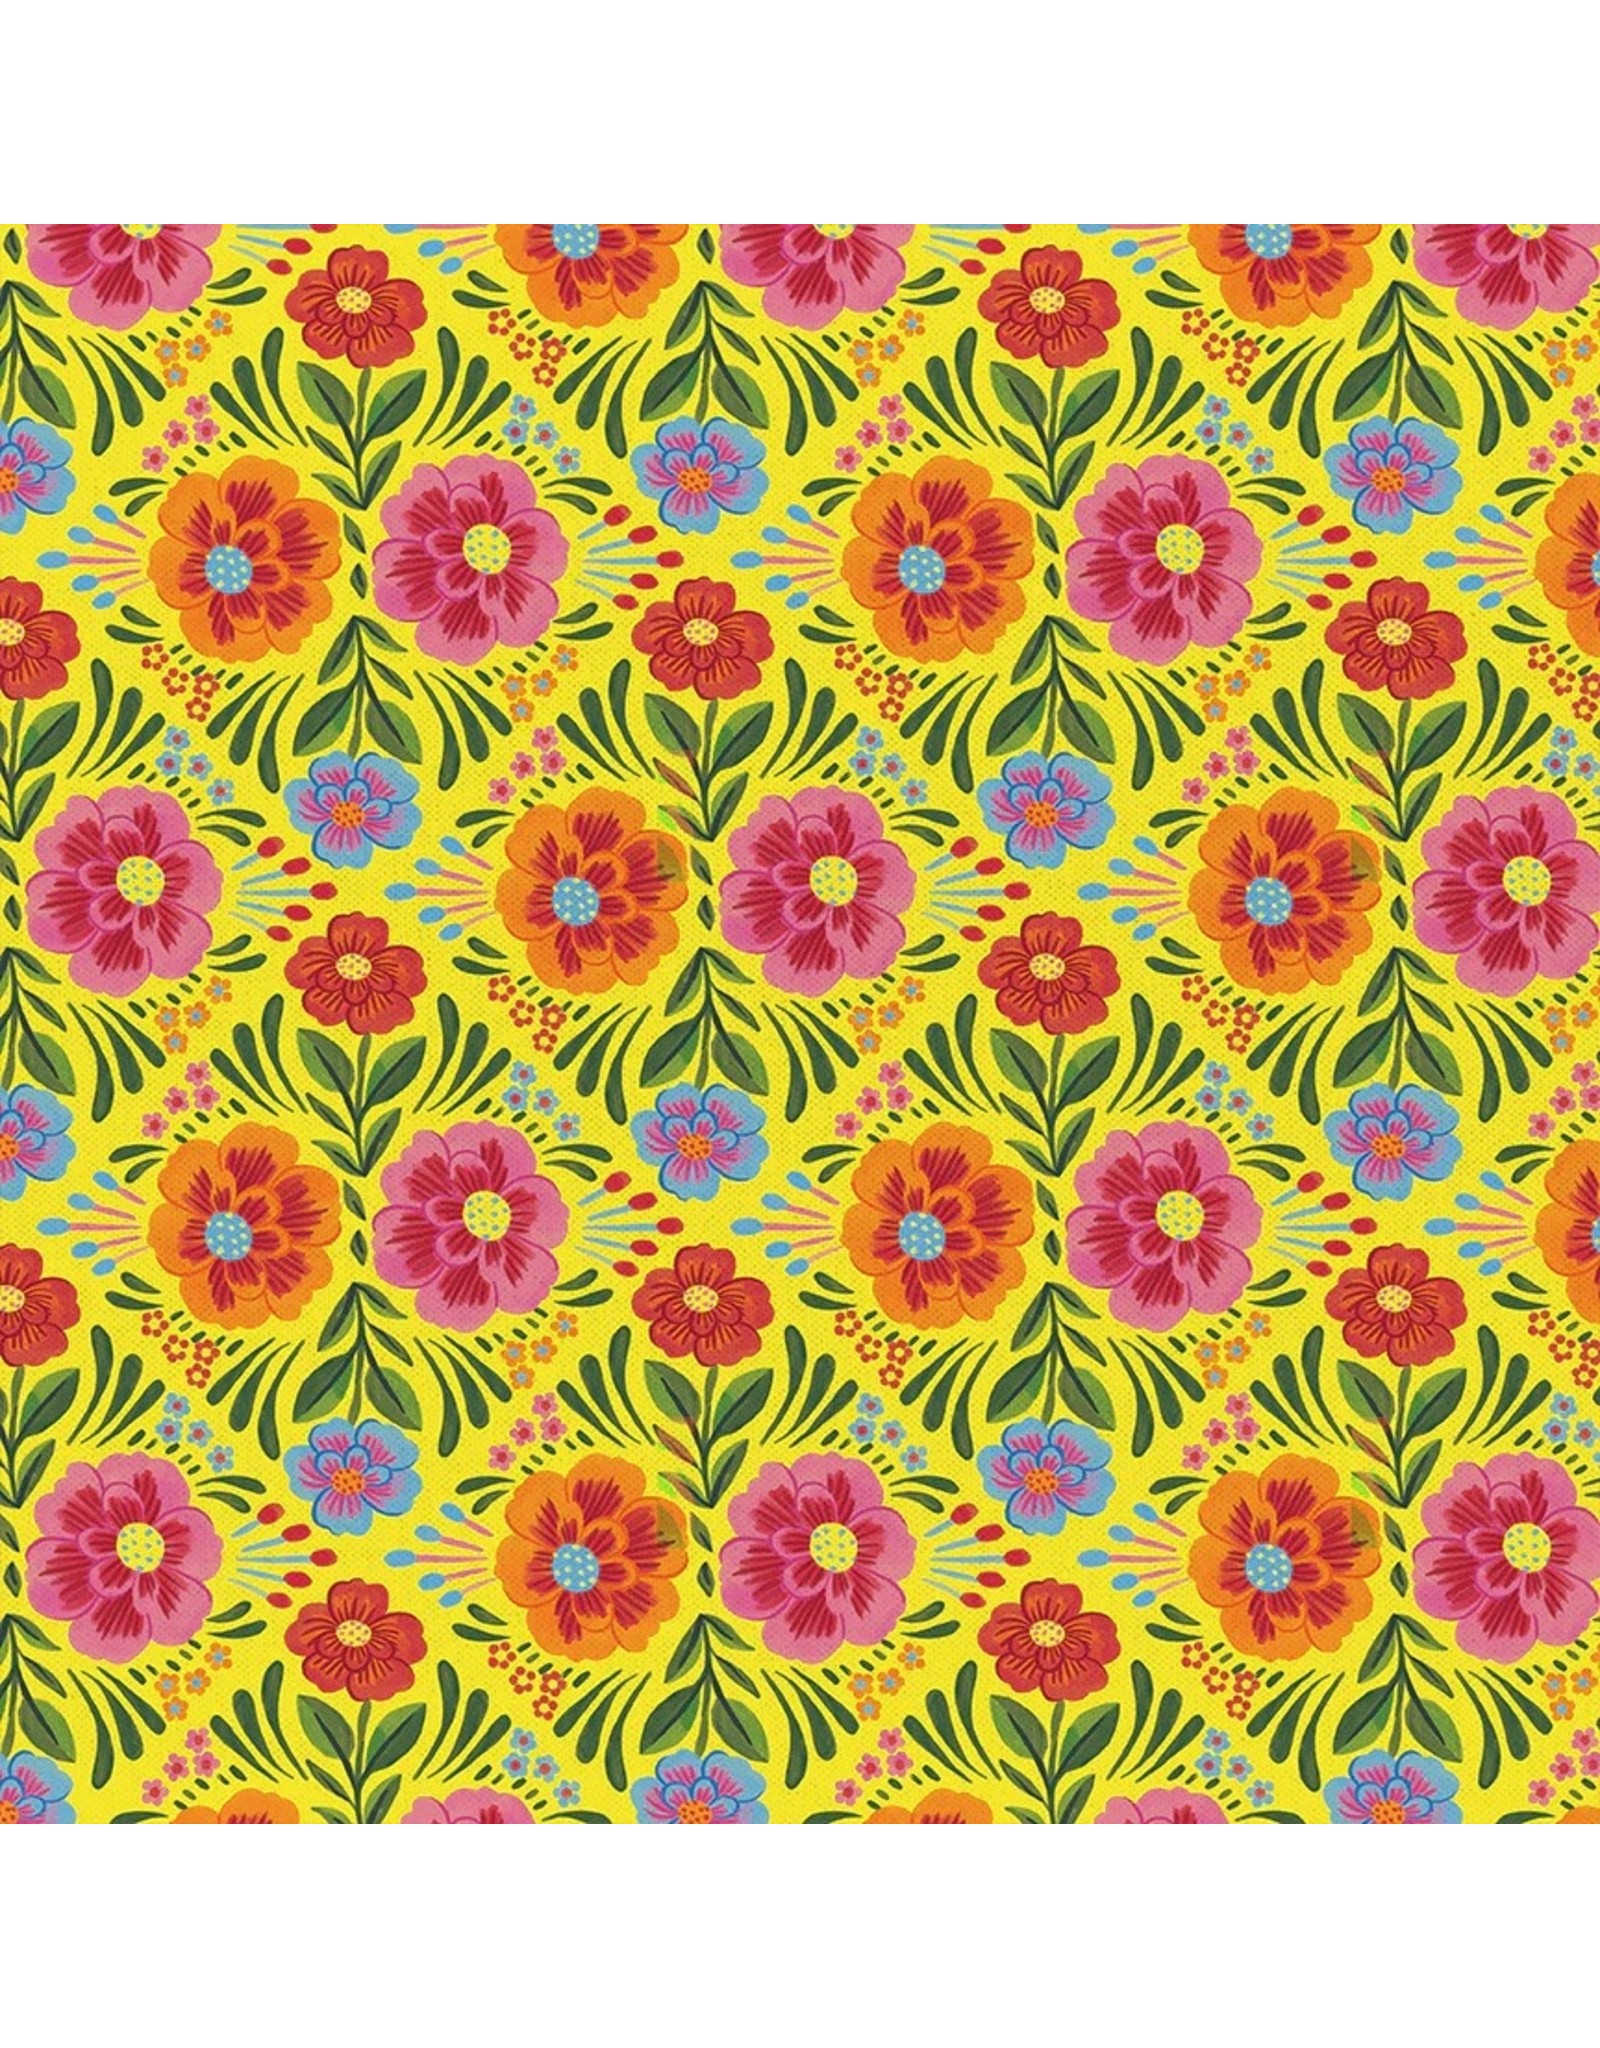 Paintbrush Studio Viva Mexico, Marigolds in Yellow, Fabric Half-Yards